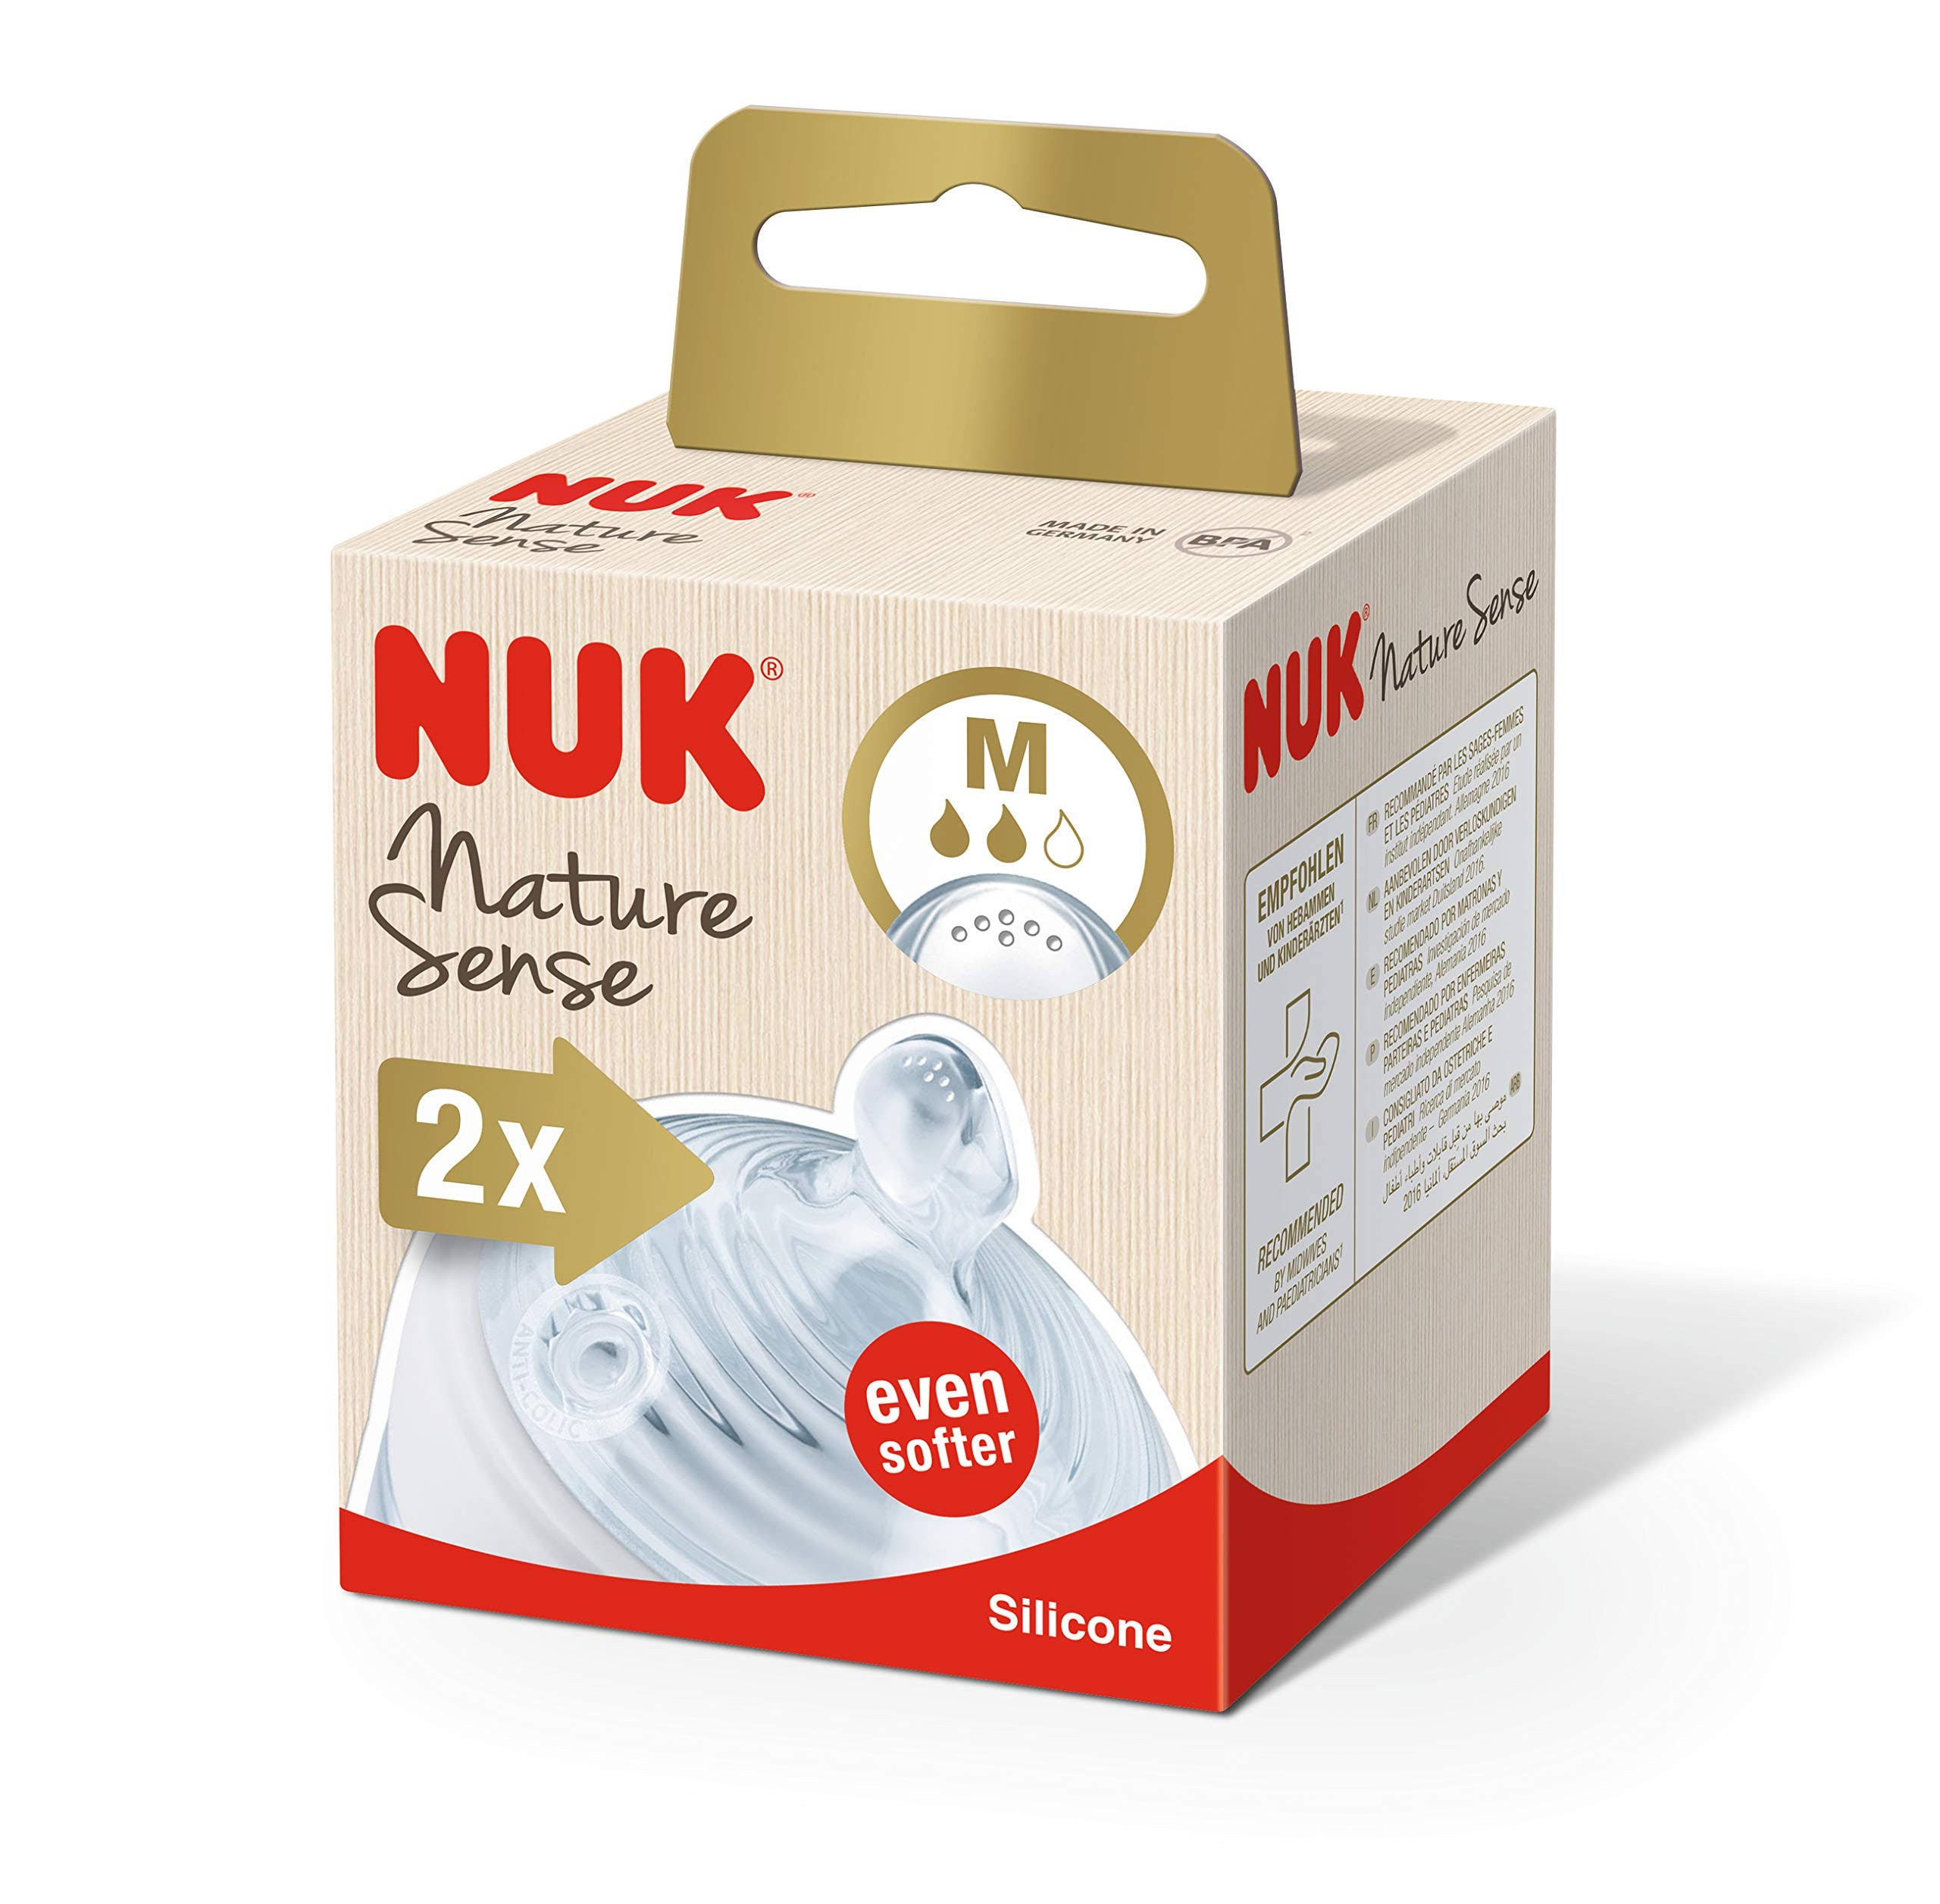 NUK Nature Sense Softer Teat, 2 Pack - Medium Hole